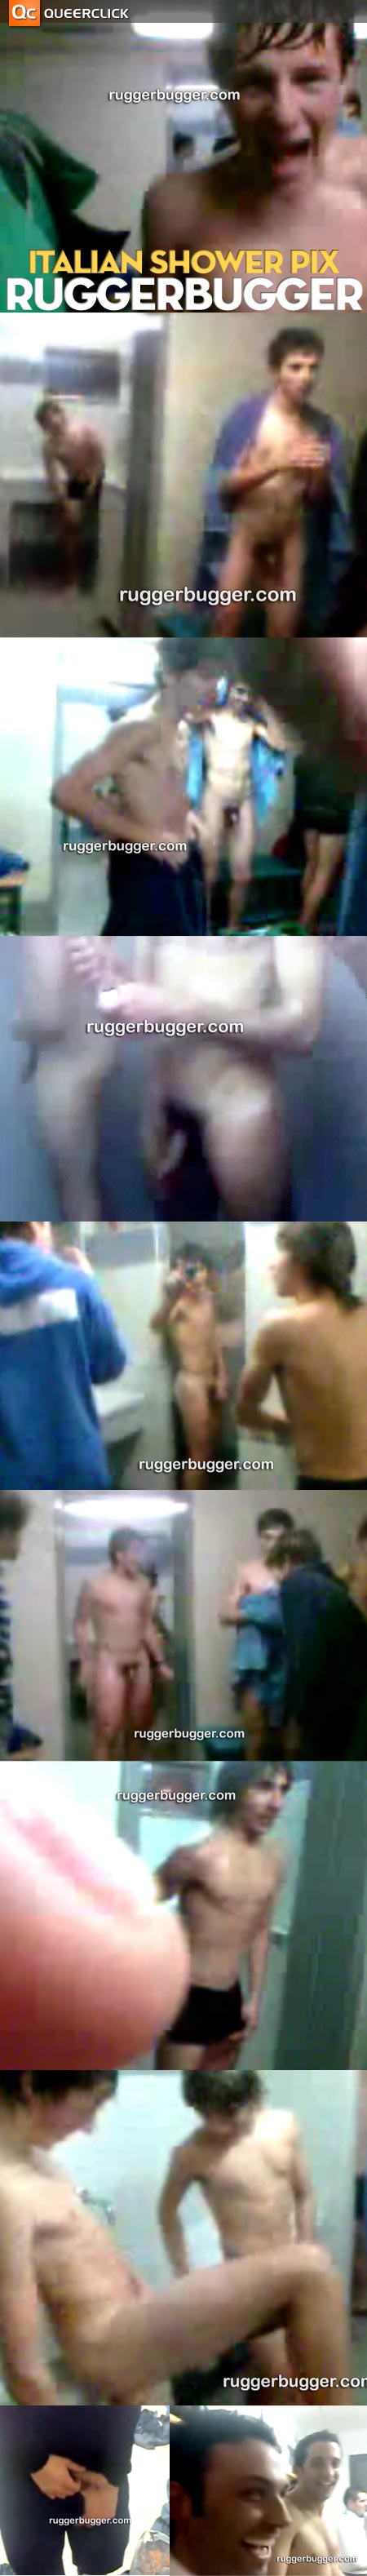 Italian Guys in the Shower at Ruggerbugger